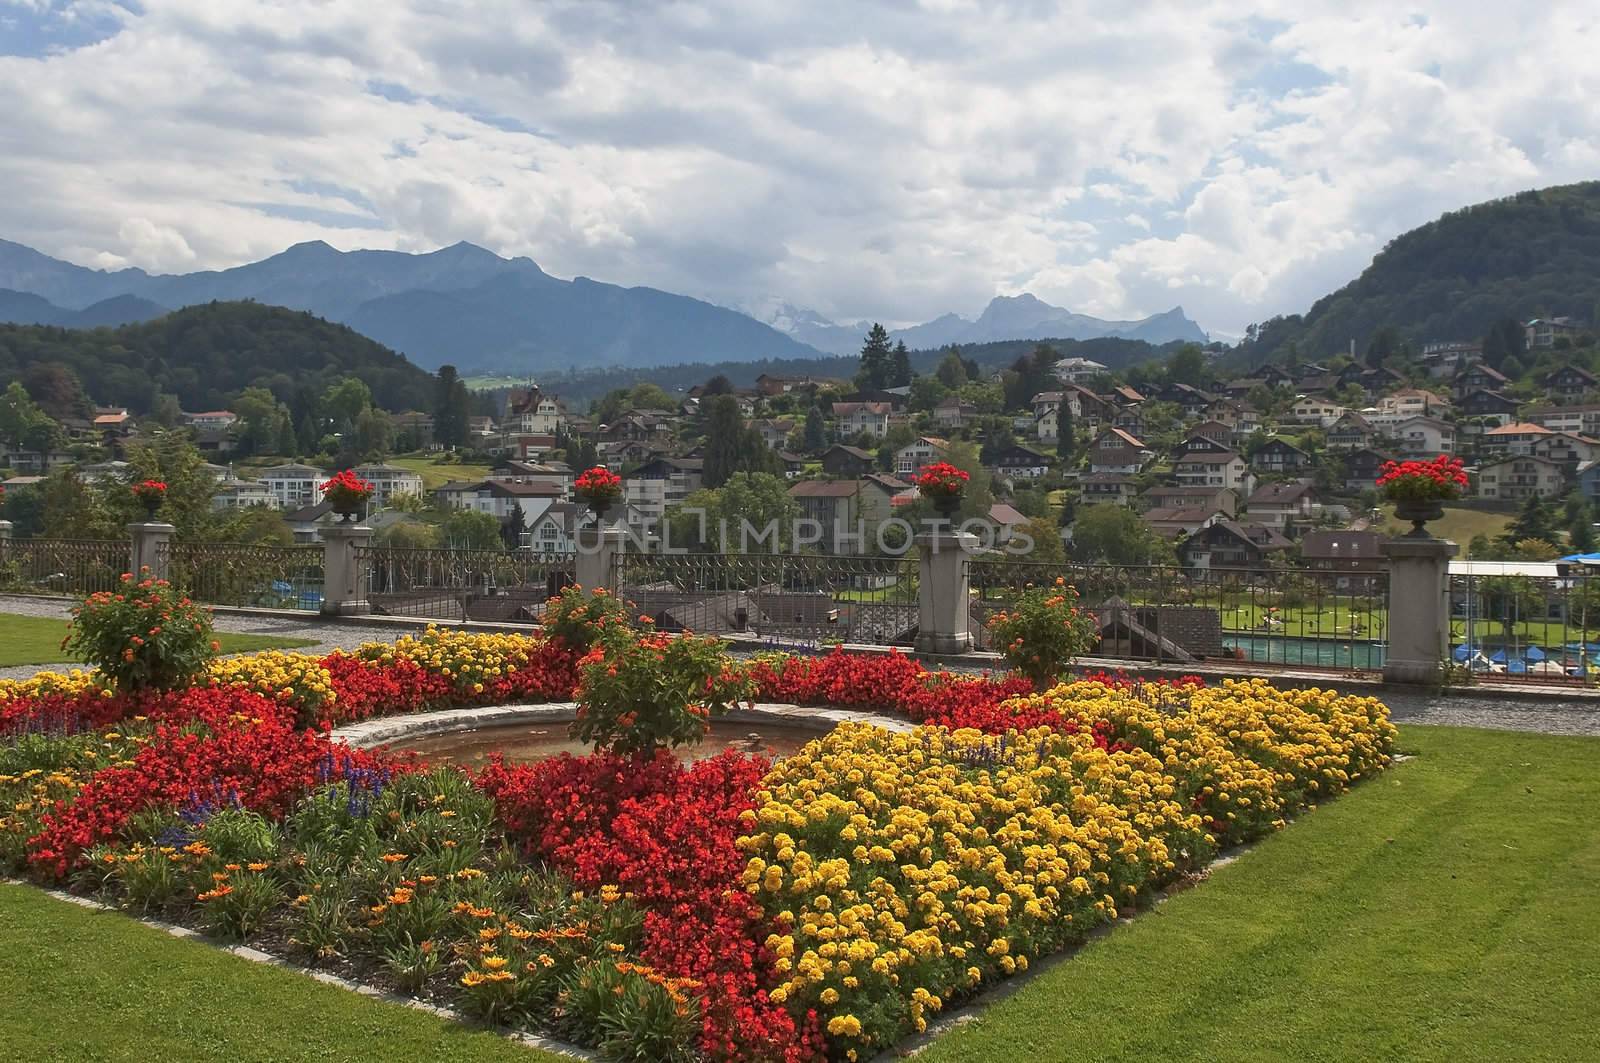 beautiful view of the small town Spiez, Switzerland